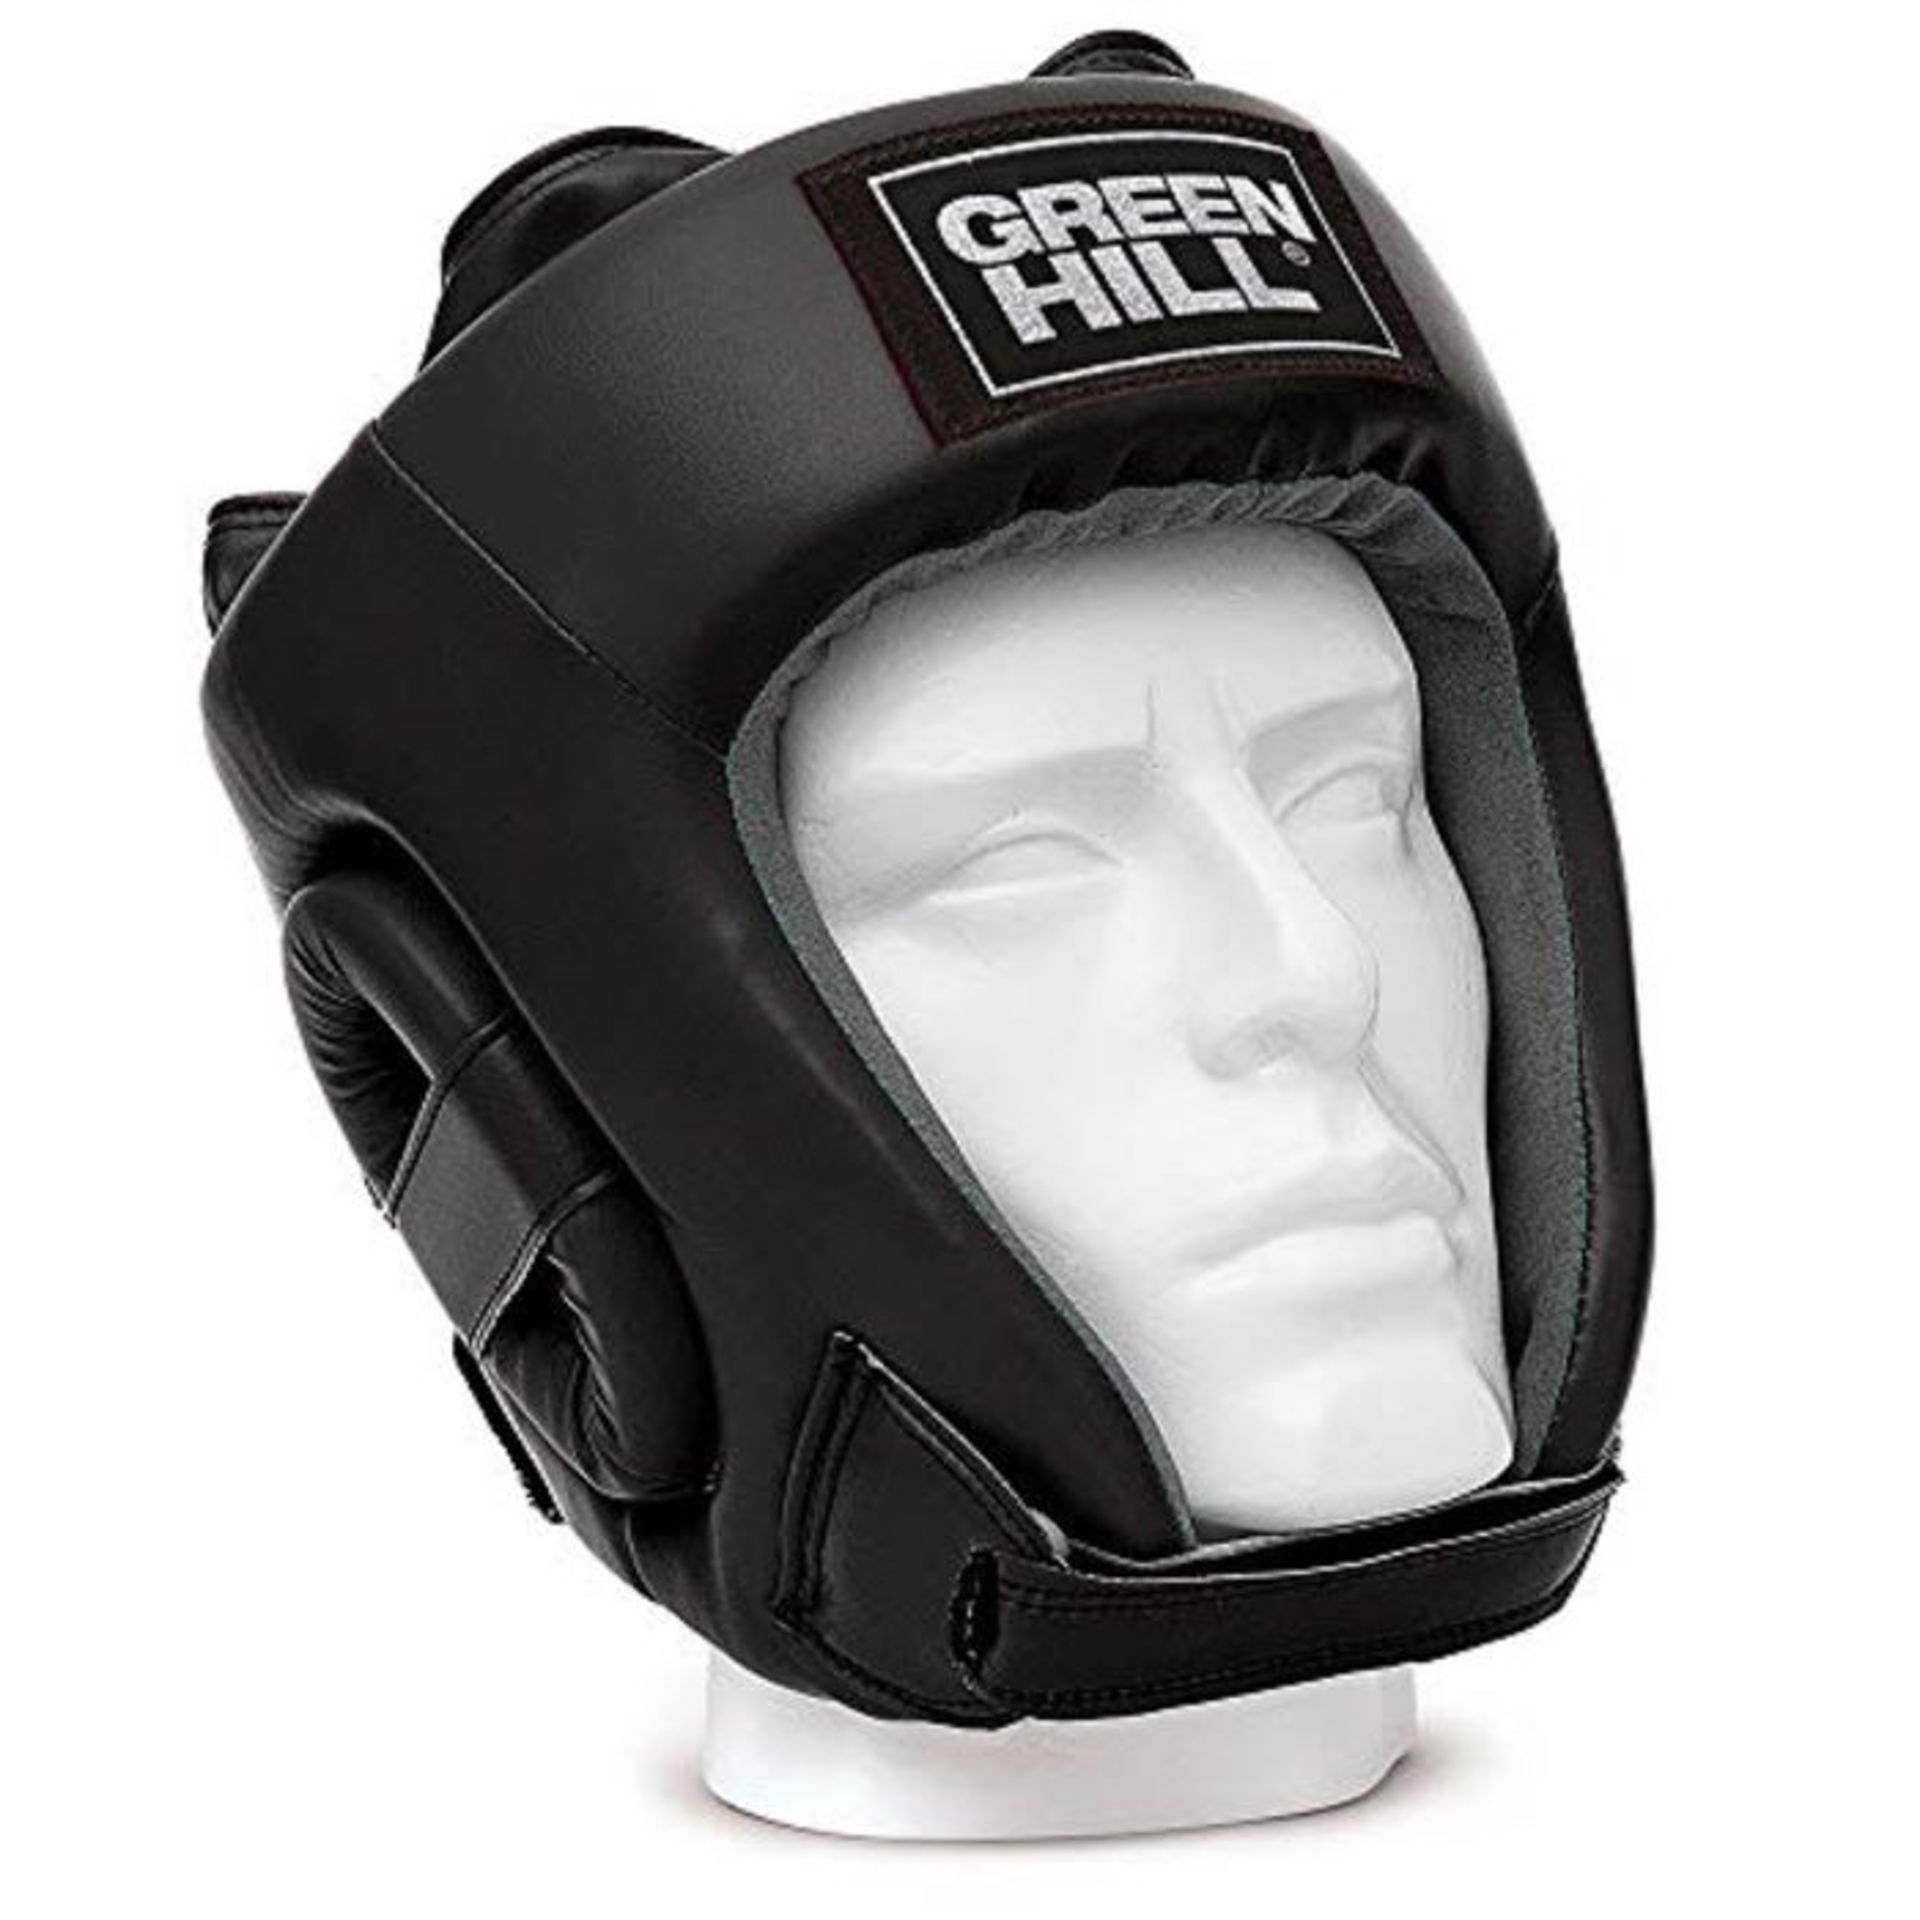 Green Hill Training Boxing Helmet Unisex - Adult, Black, M